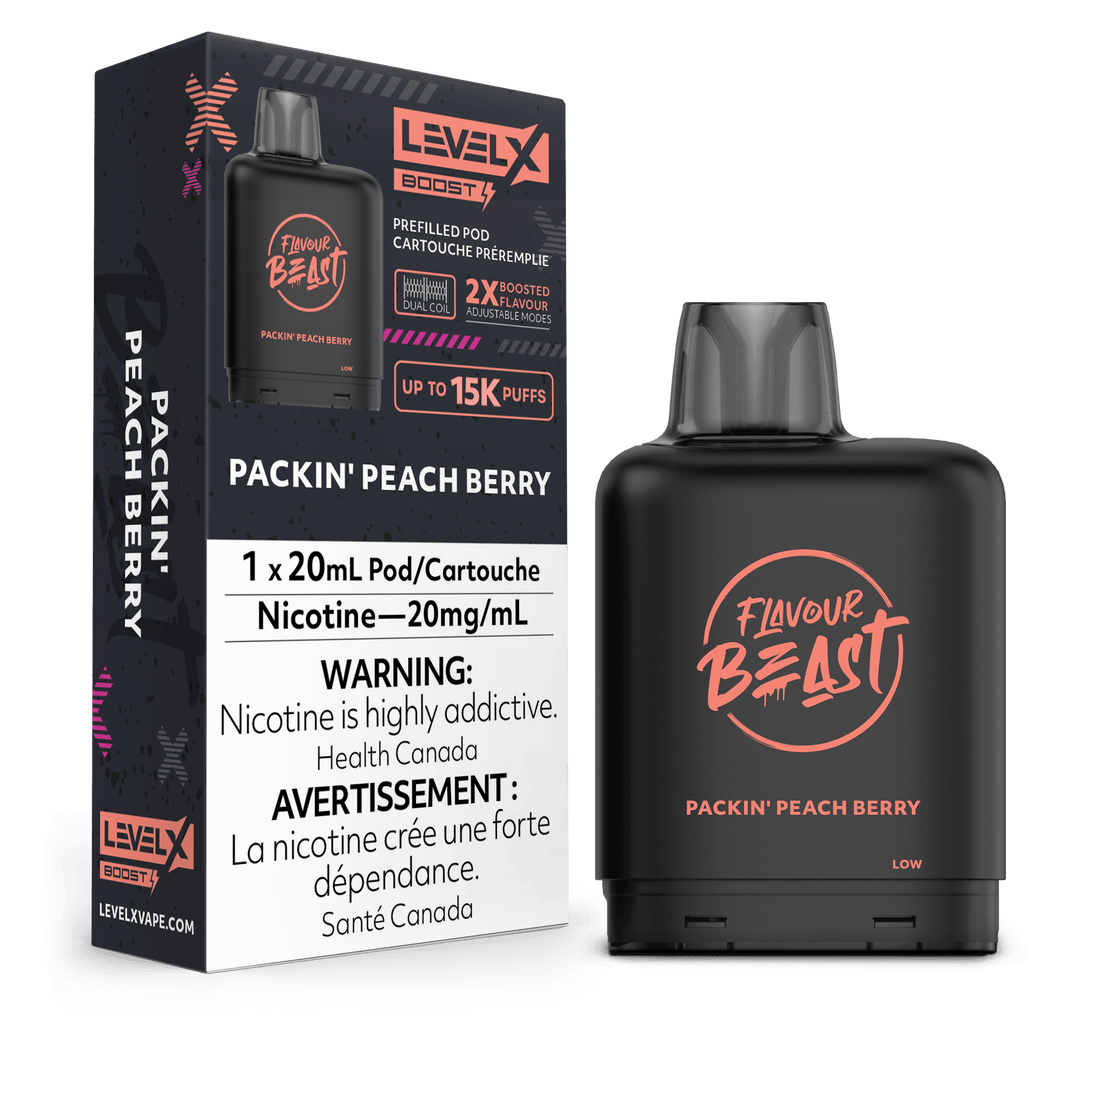 Level X Boost Flavour Beast - Packin' Peach Berry - Vapor Shoppe